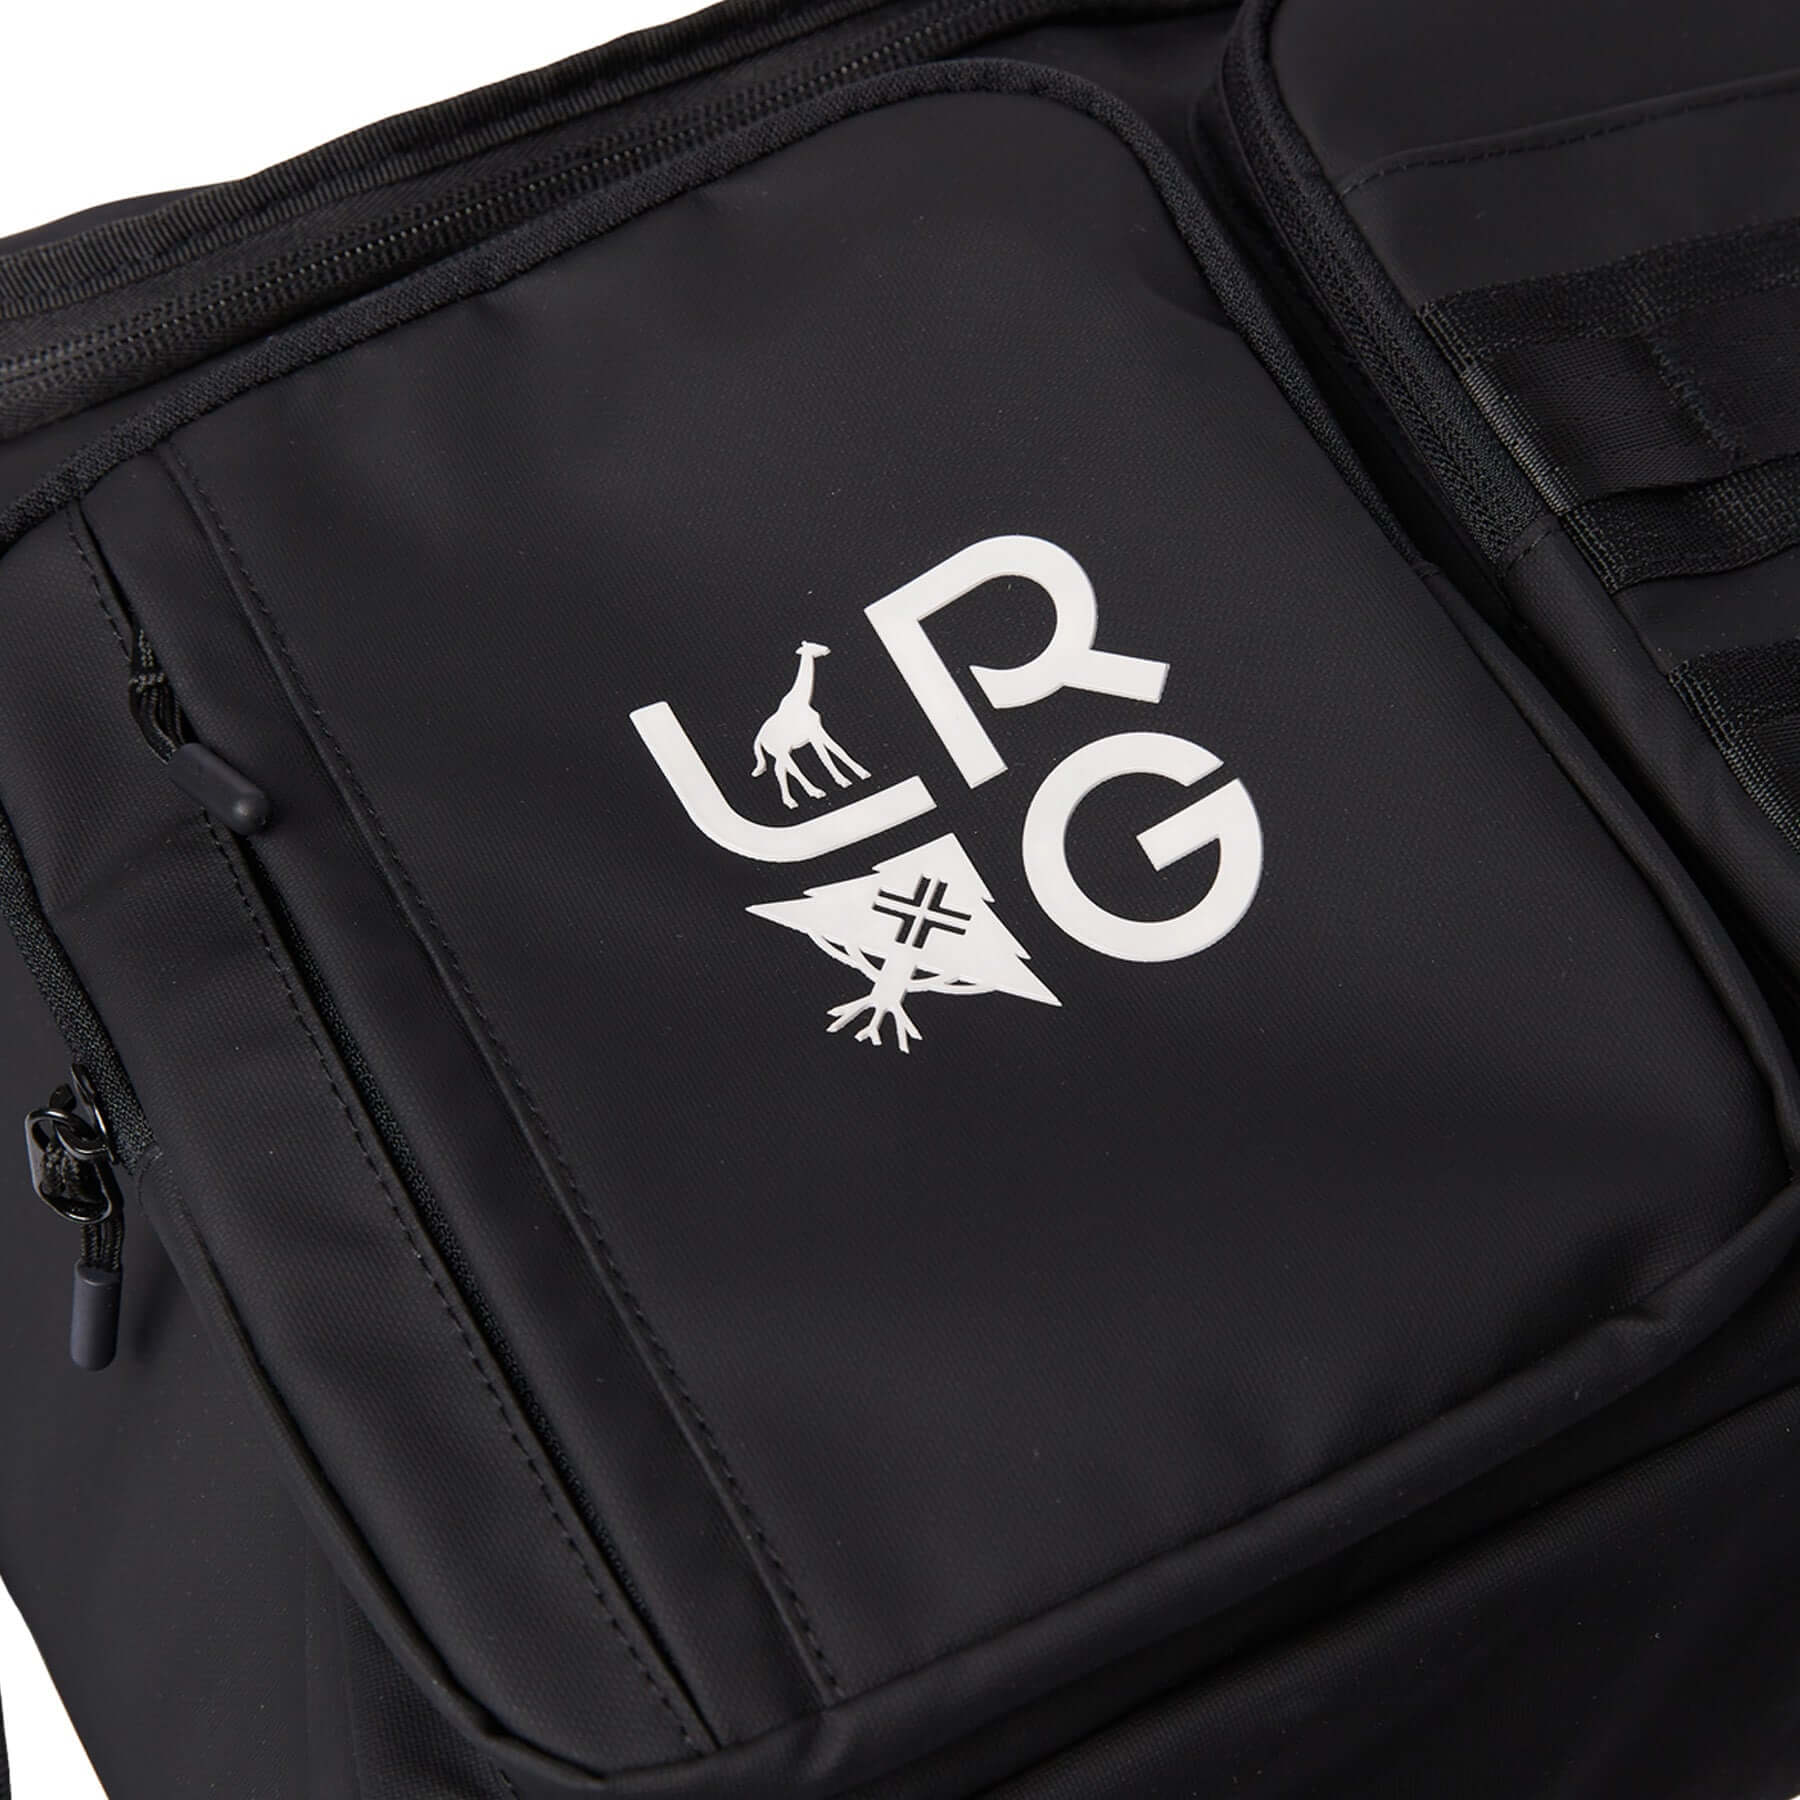 Lv utility messenger bag Available